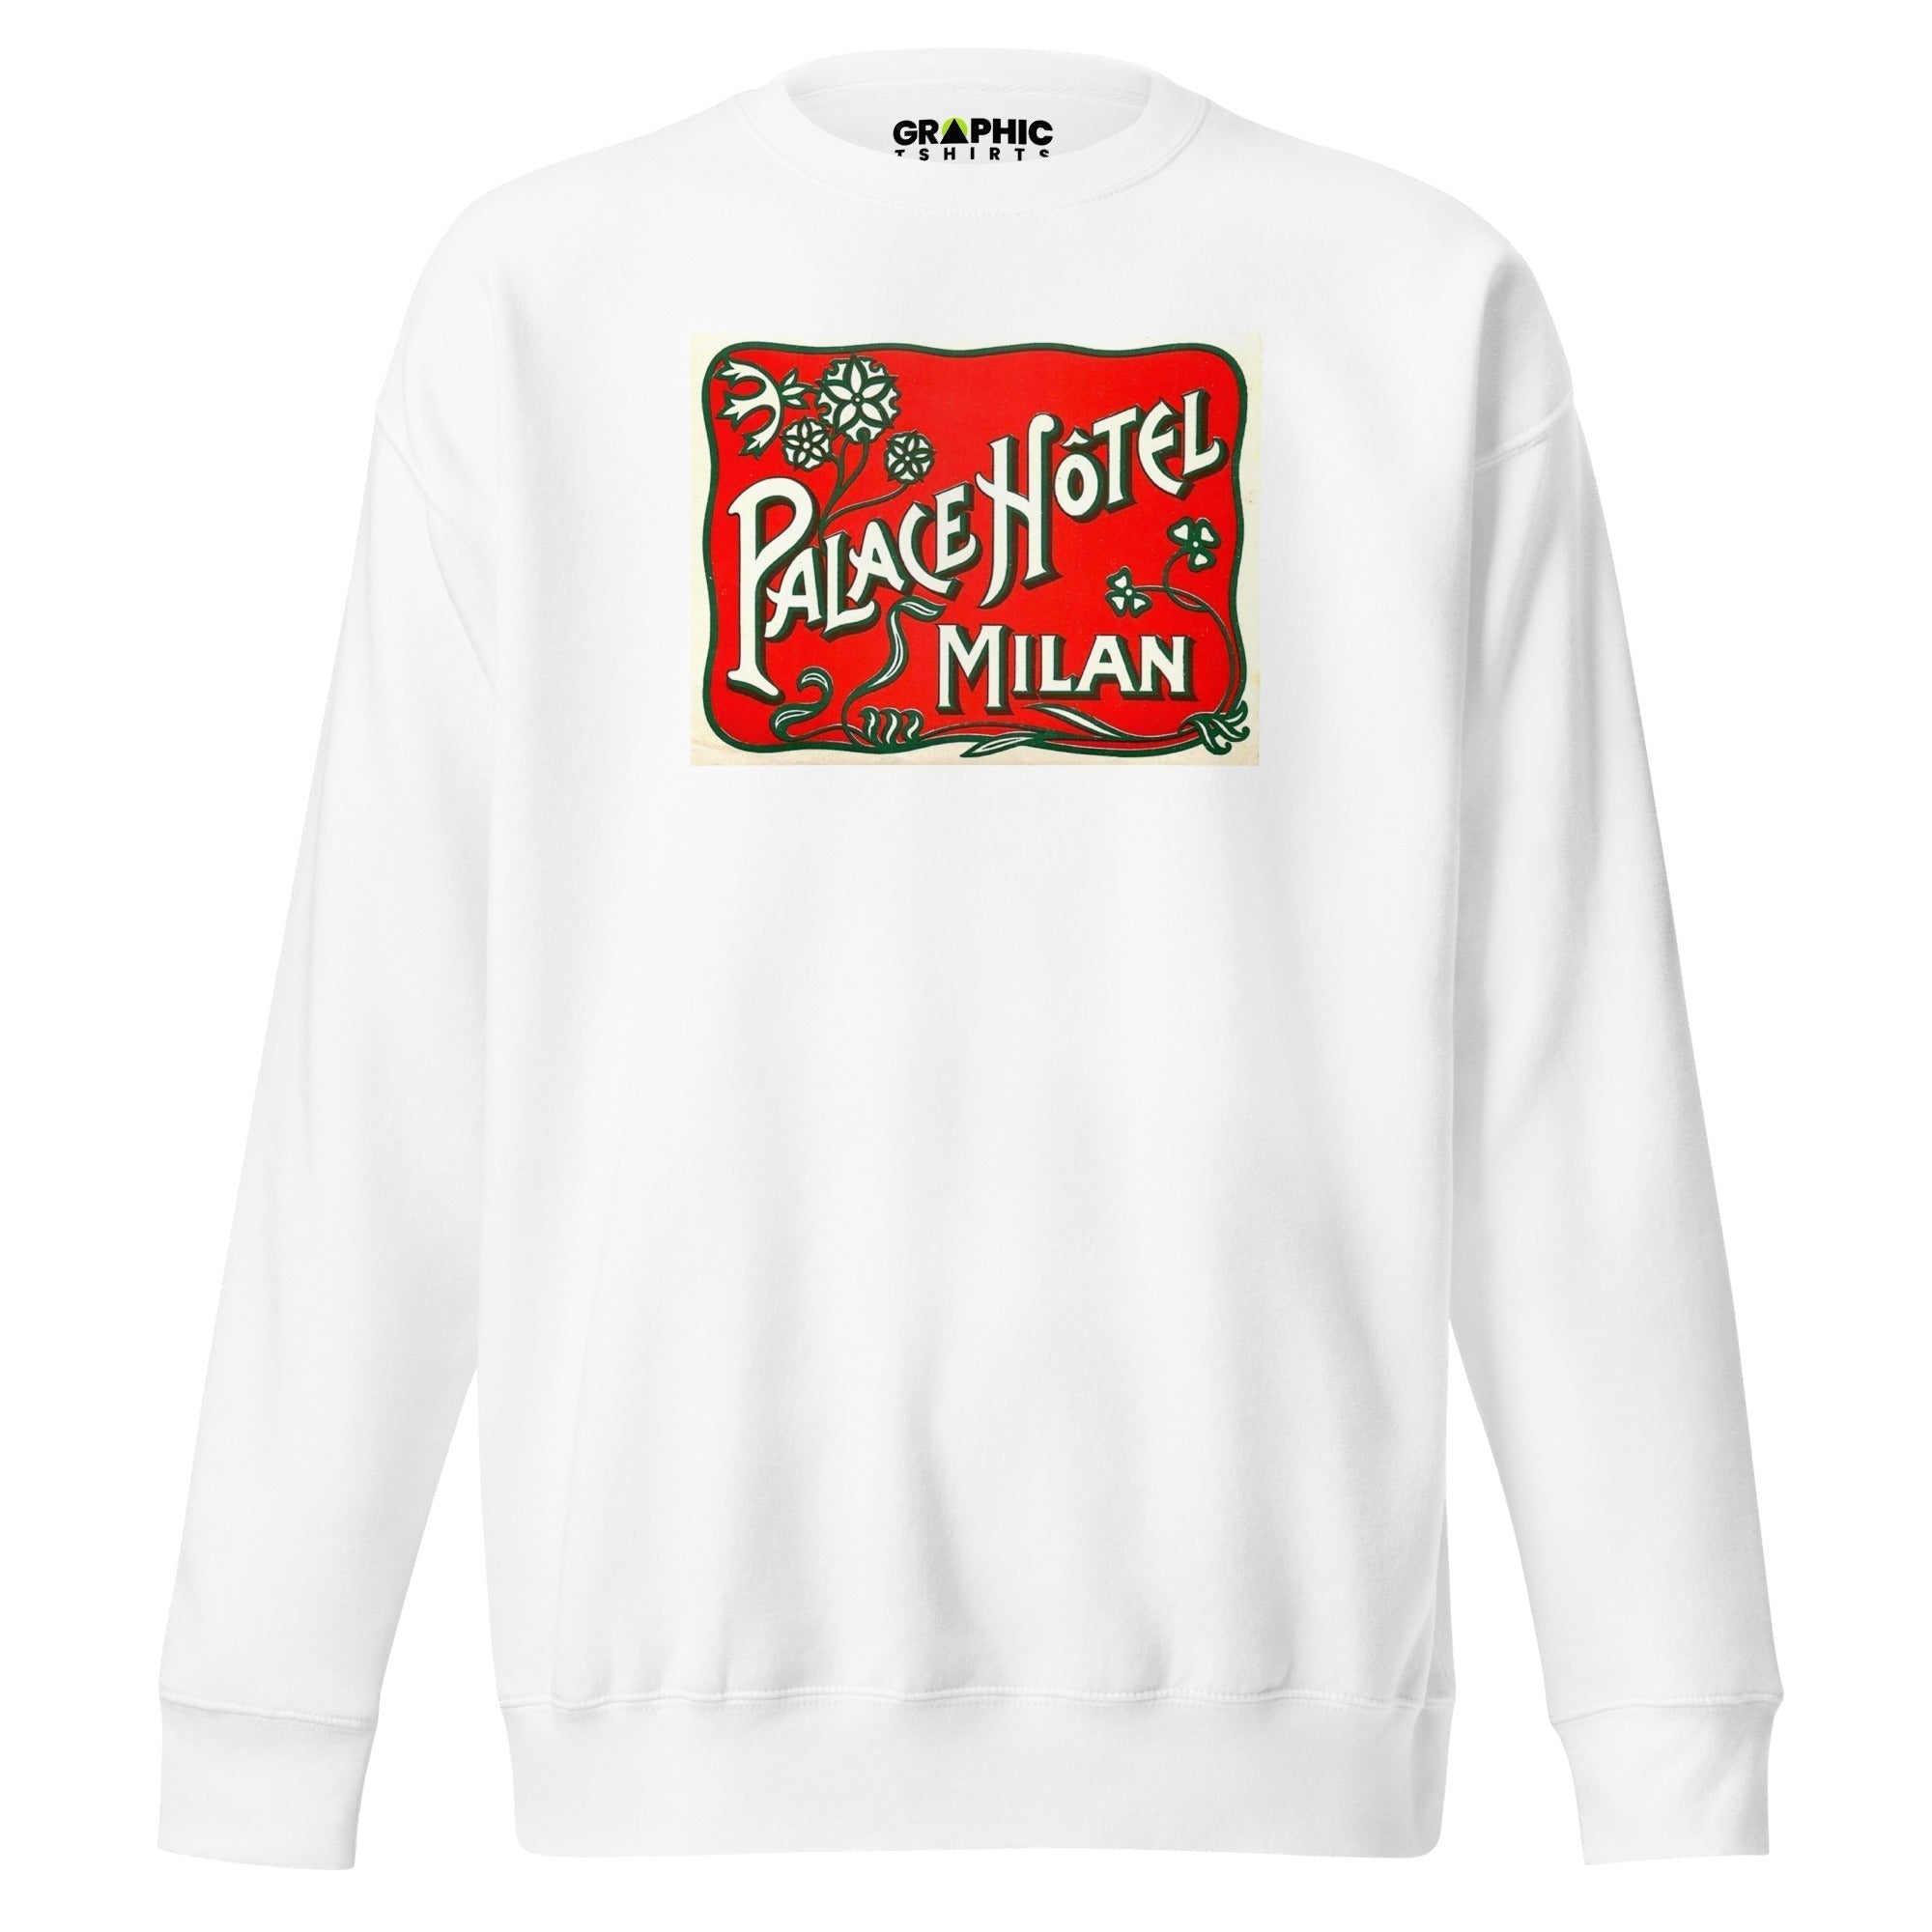 Unisex Premium Sweatshirt - Palace Hotel Milan - GRAPHIC T-SHIRTS